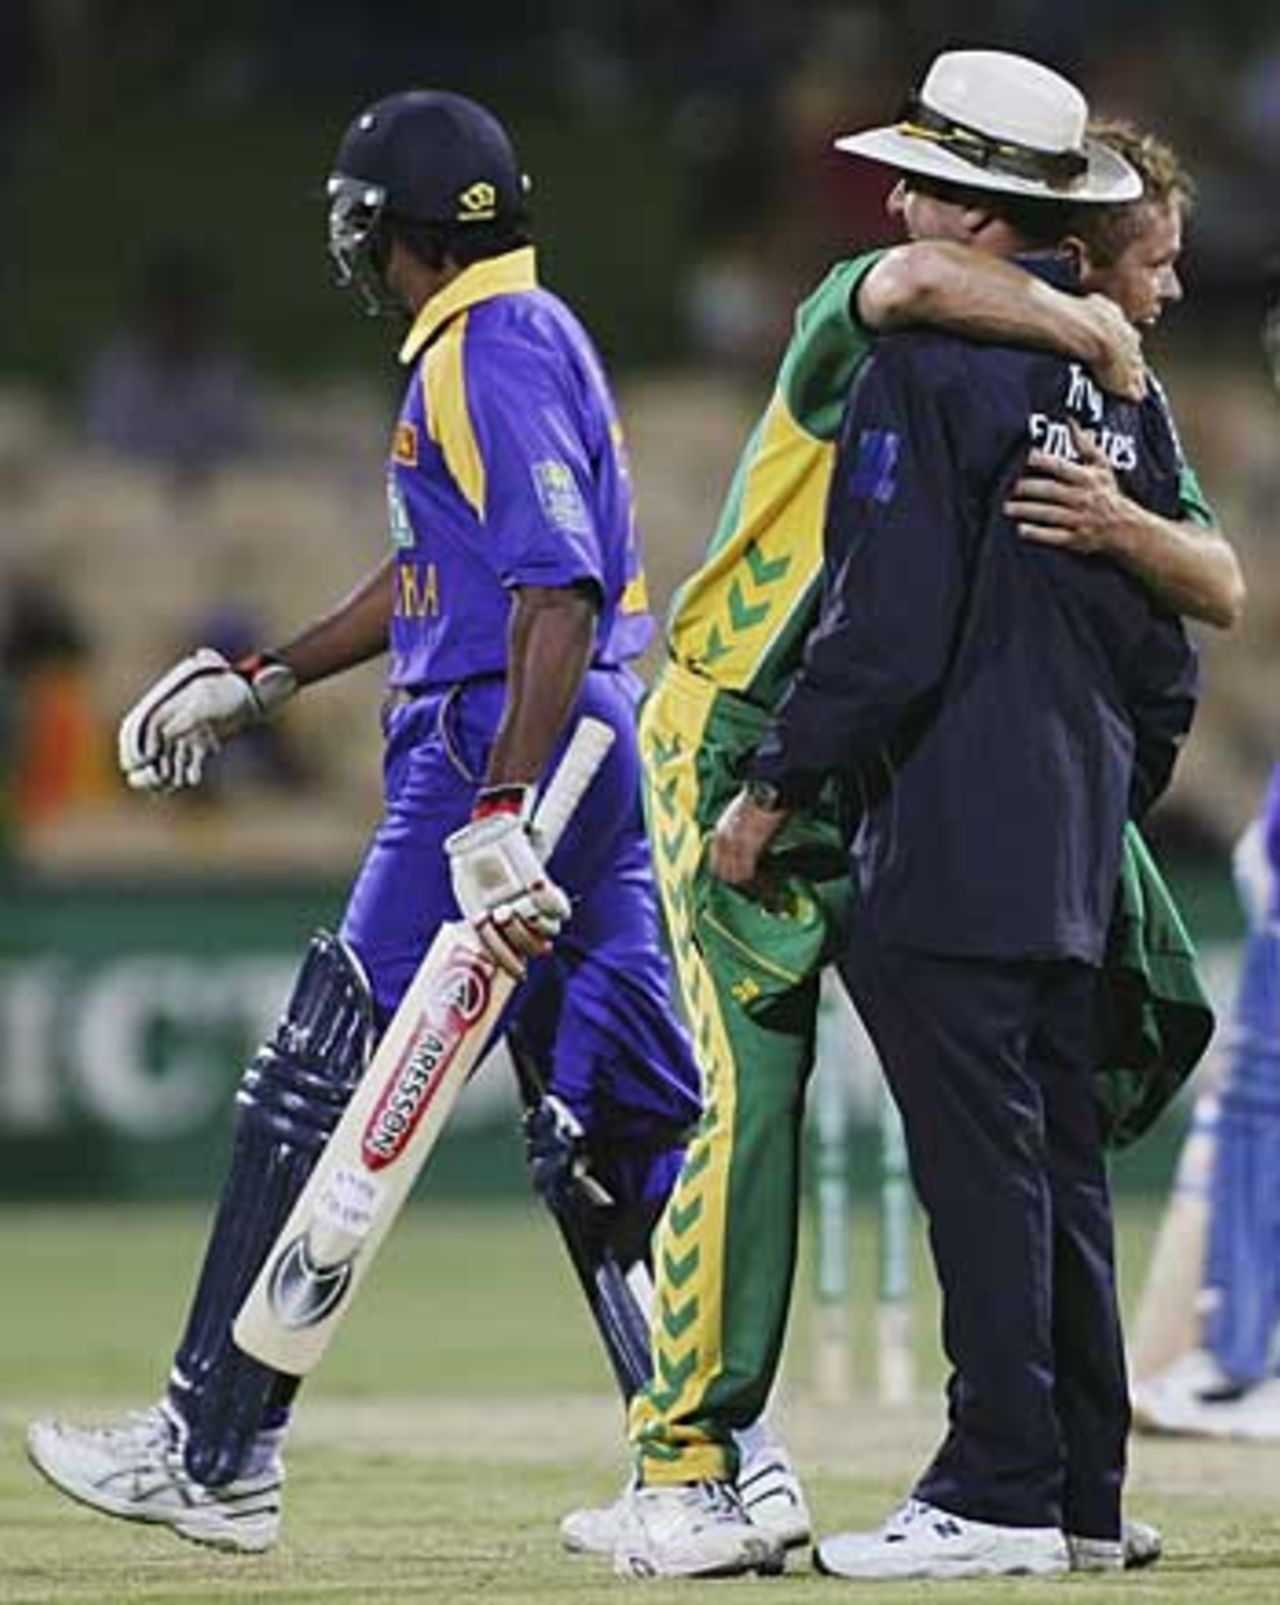 Shaun Pollock celebrates...by hugging umpire Aleem Dar, South Africa v Sri Lanka, 6th match, VB Series, Adelaide, January 24, 2006